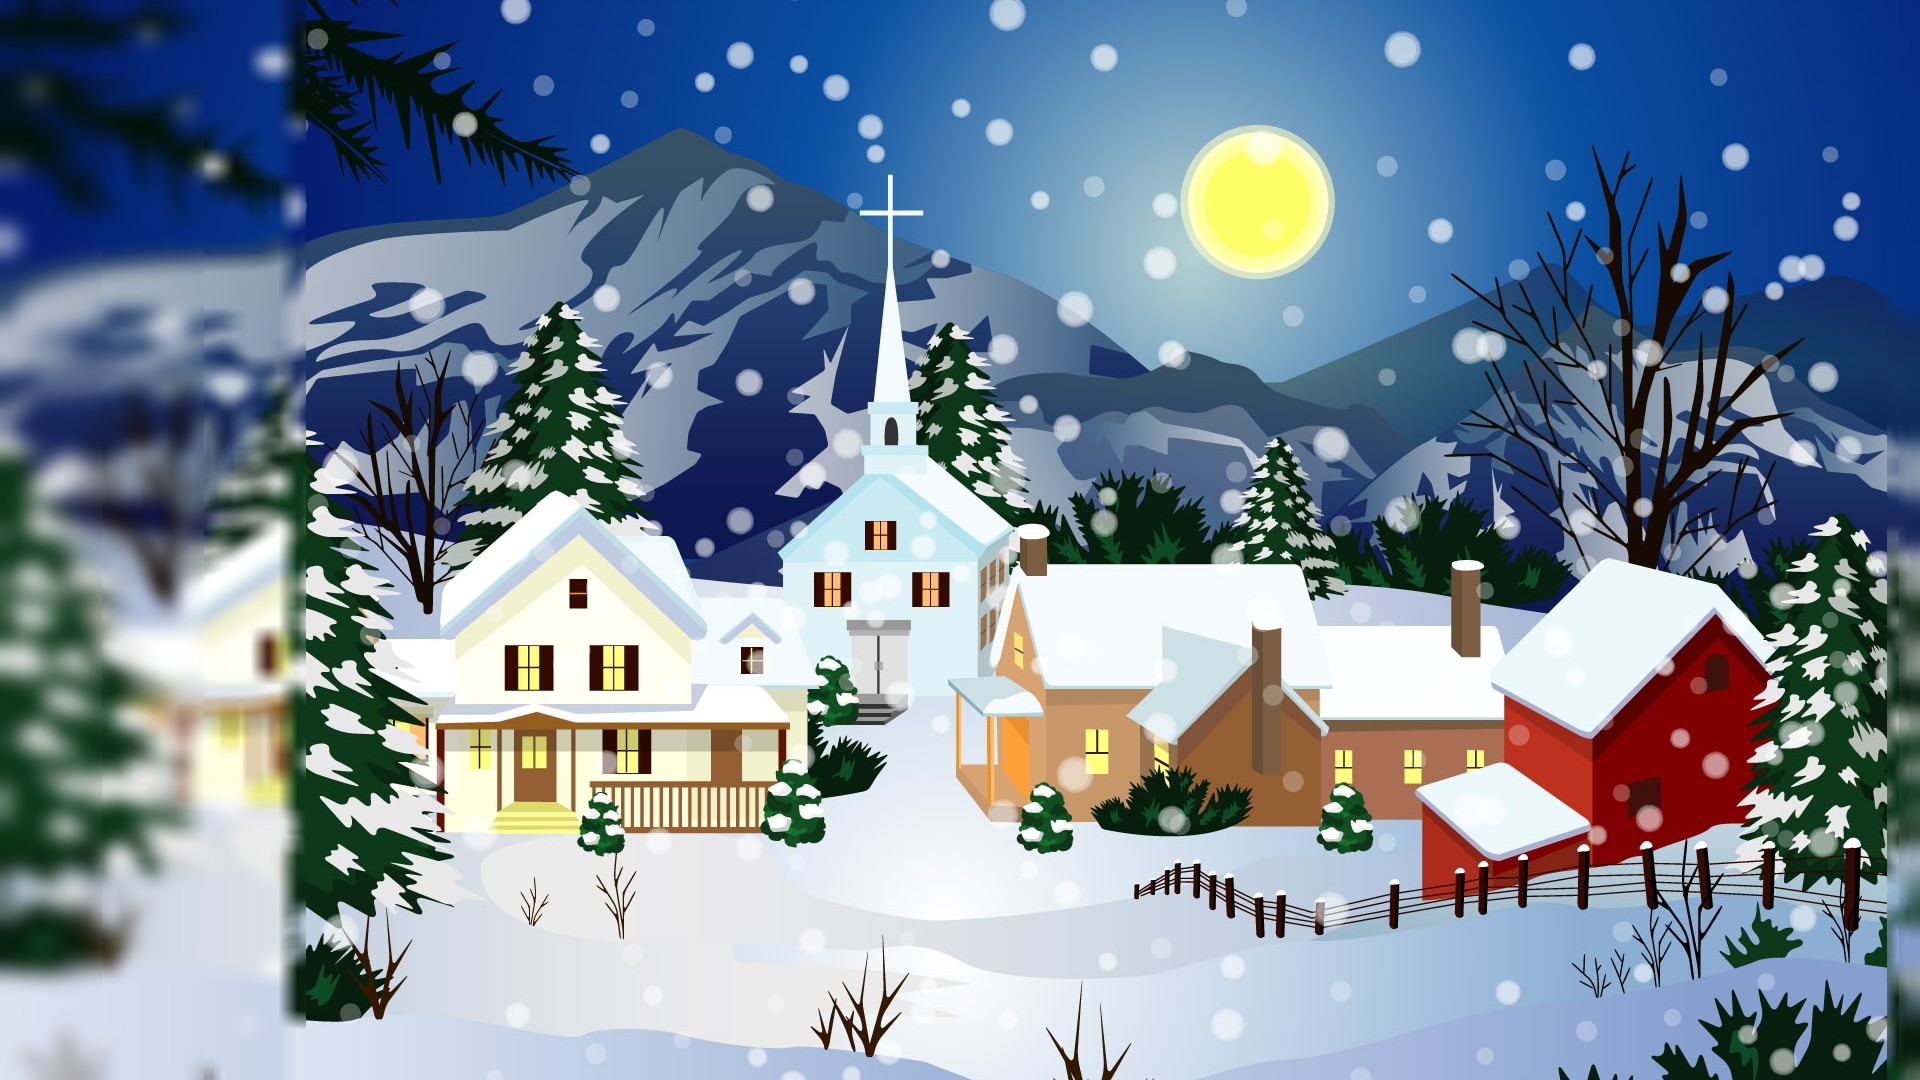 1920x1080 Animated Christmas Image. Free Newest Animated Christmas Wallpaper